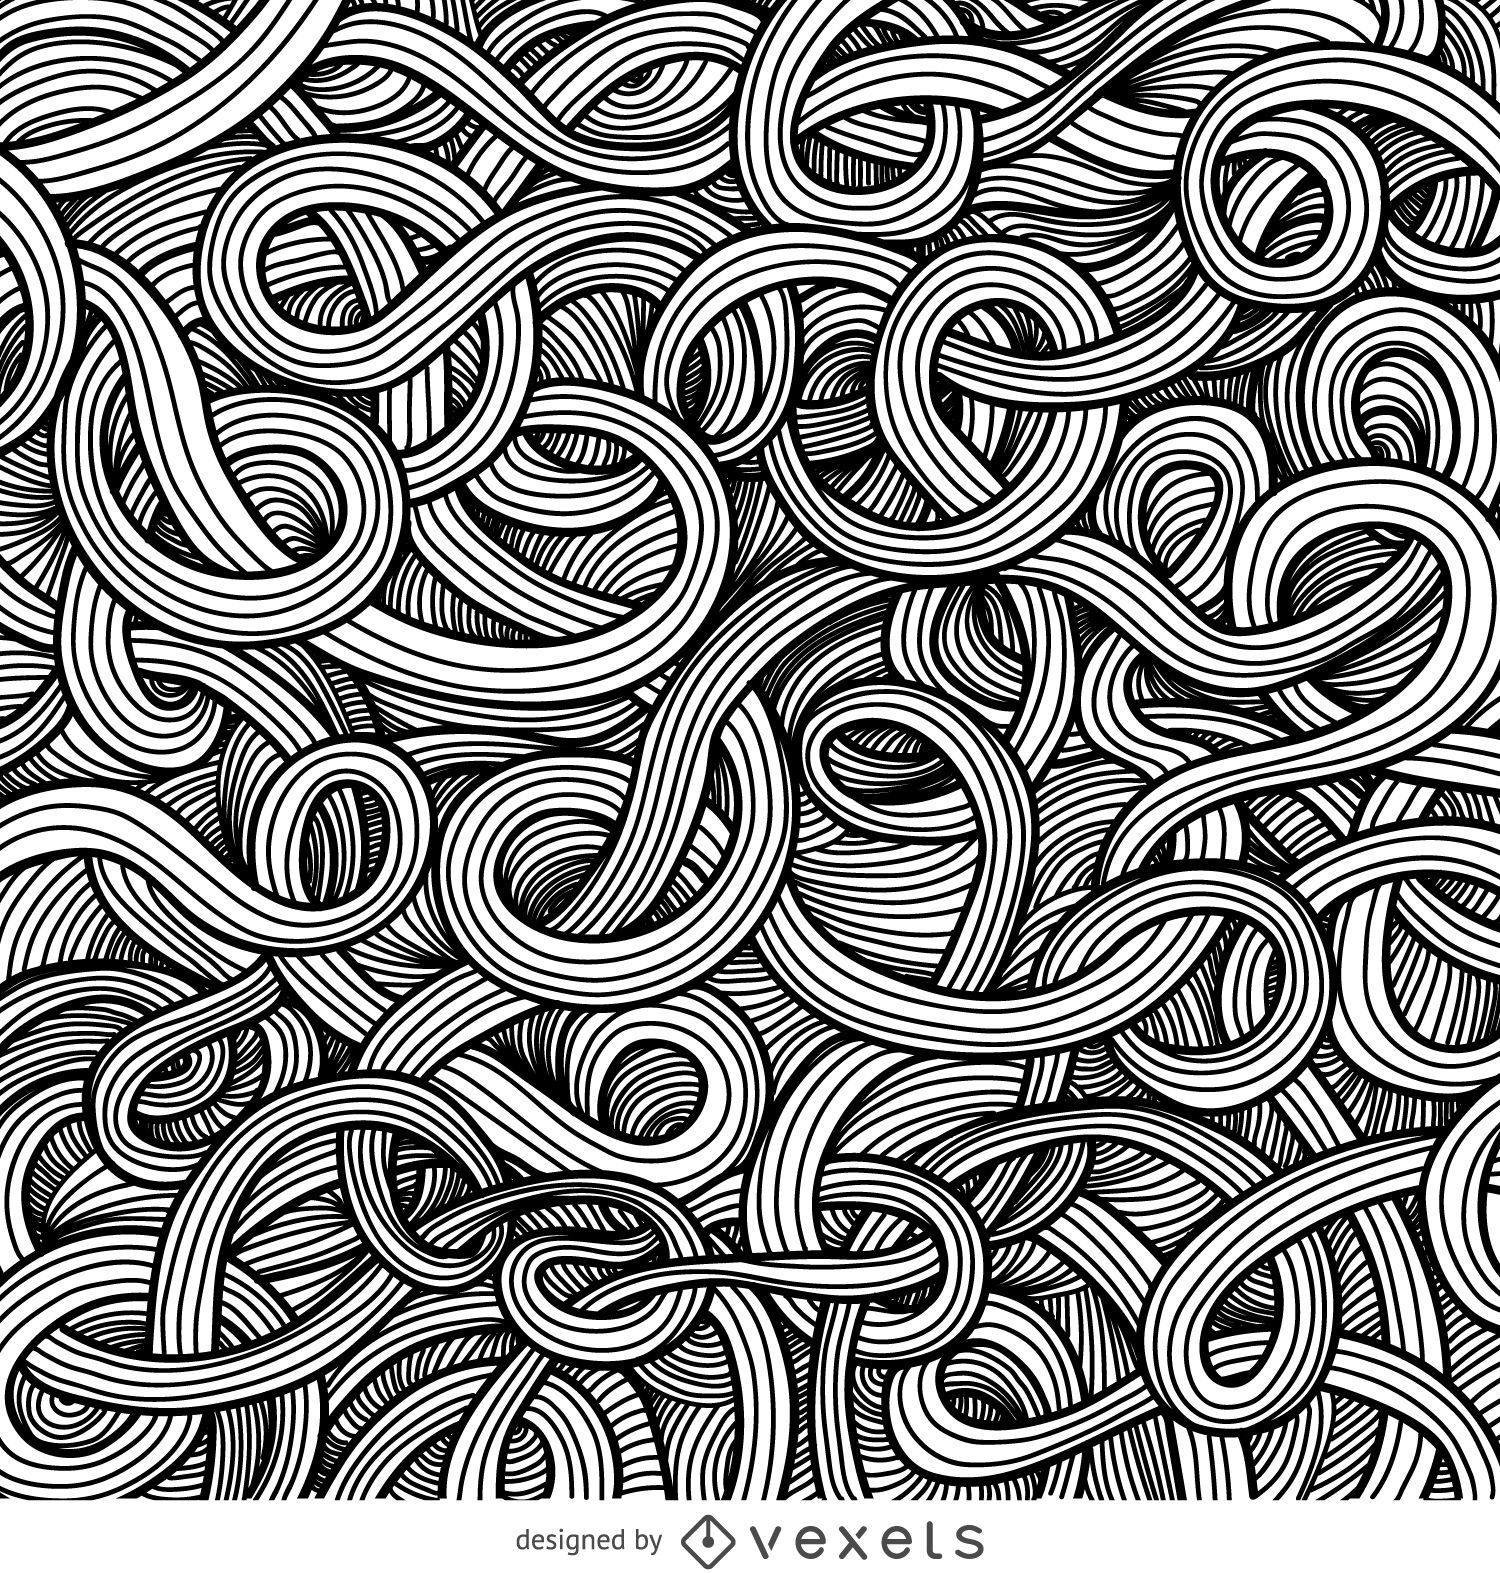 Ornamental curly swirls background